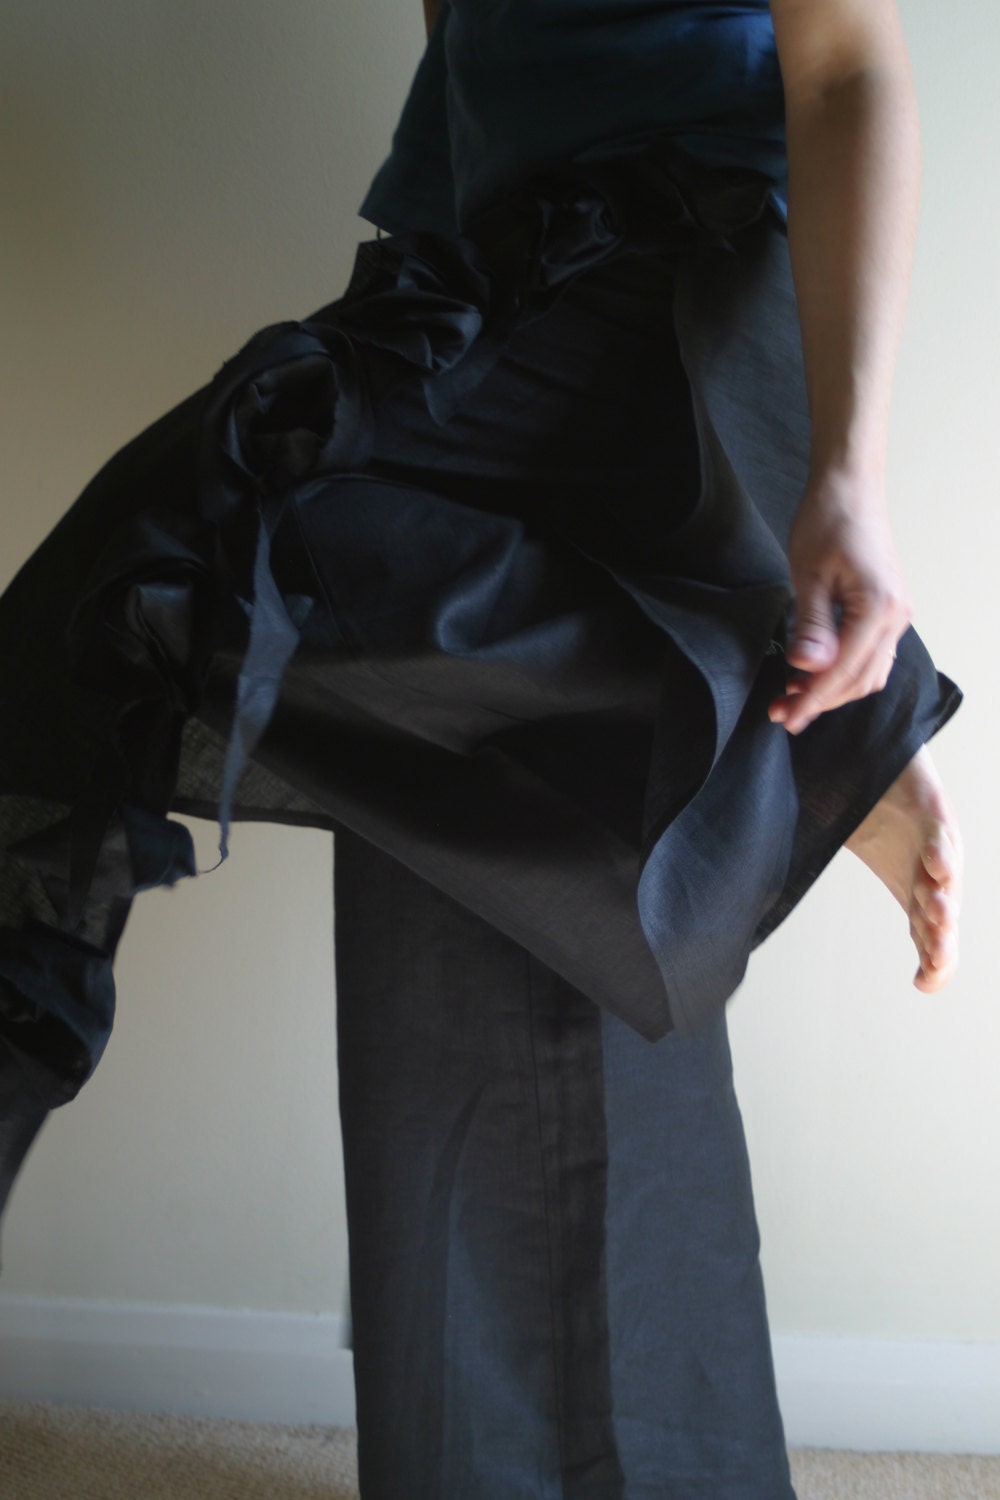 Linen Skirt Pants/Trousers by NervousWardrobe on Etsy